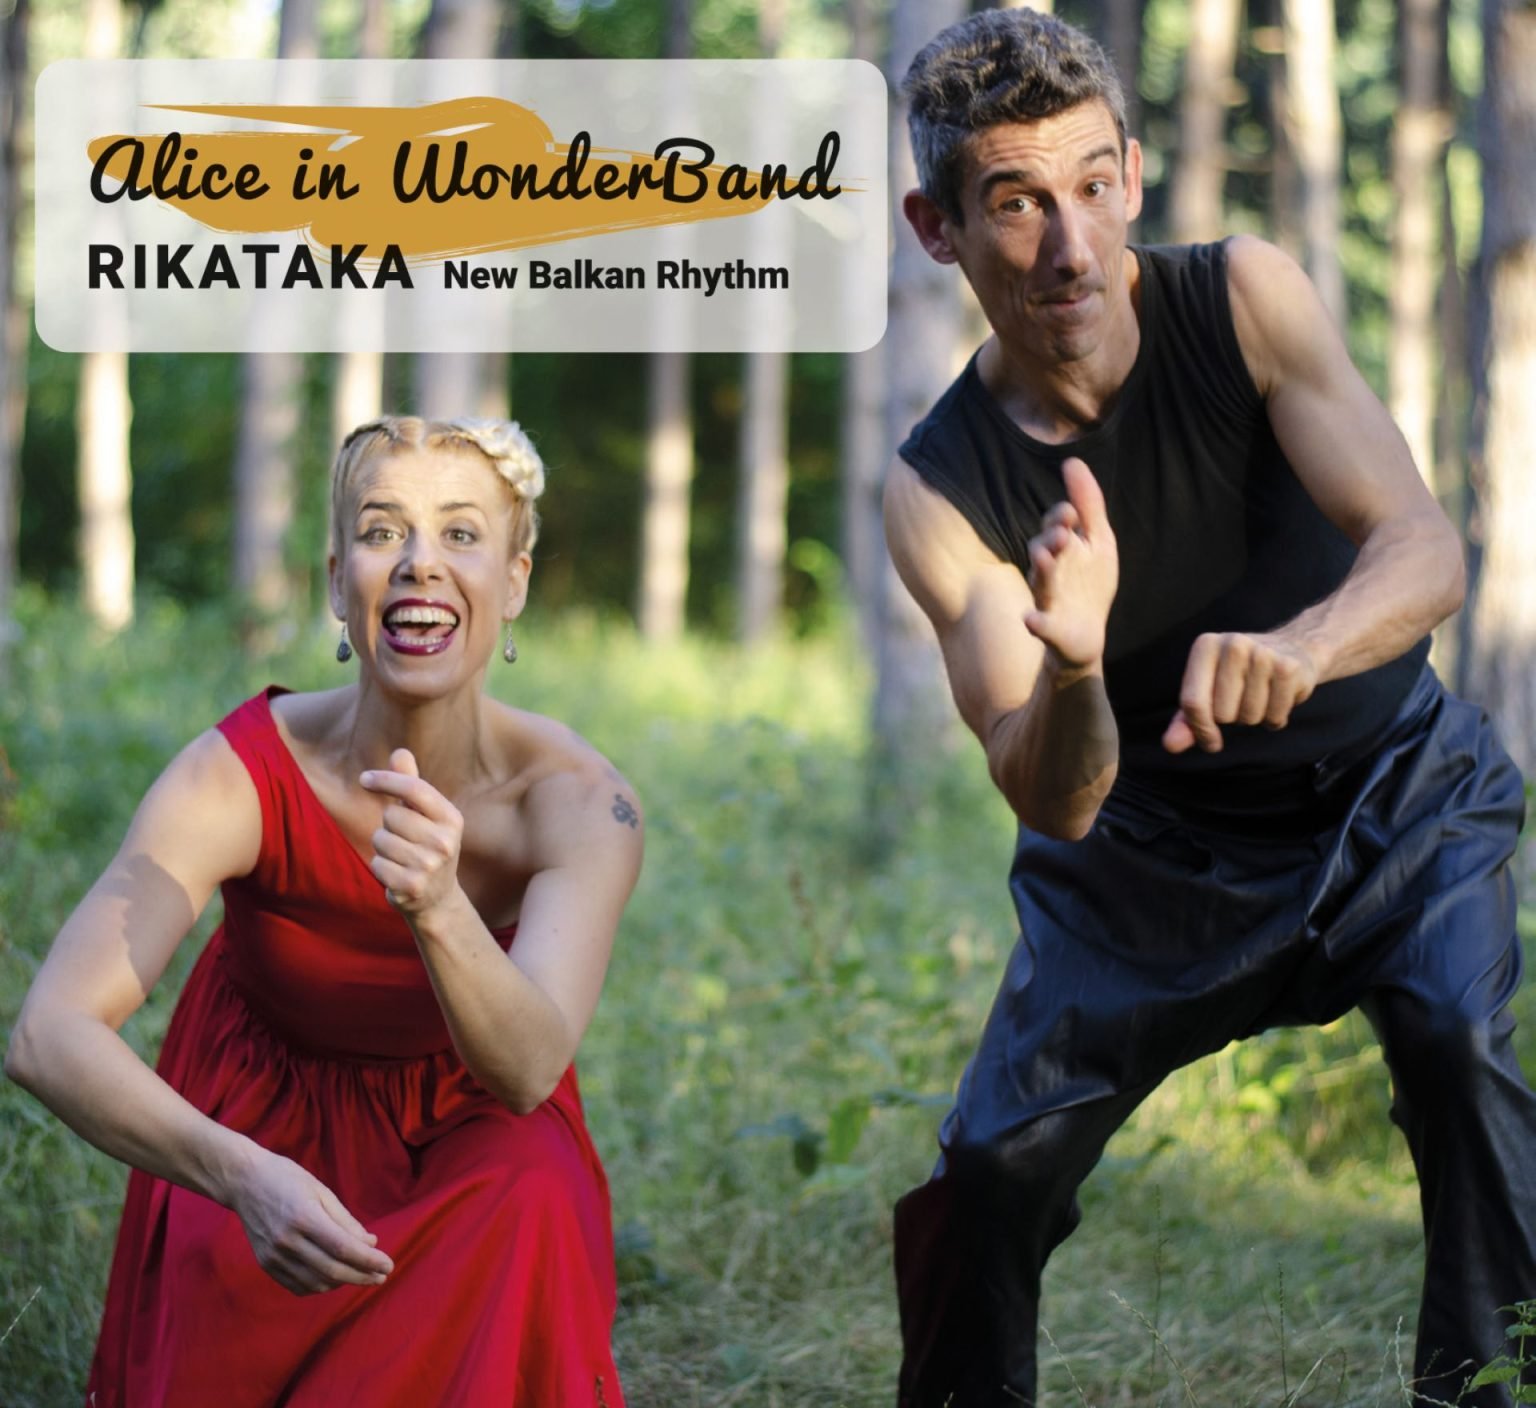 Alice-in-Wonderband-RikaTaka-New-Balkan-Rhythm-1-1536x1408.jpg